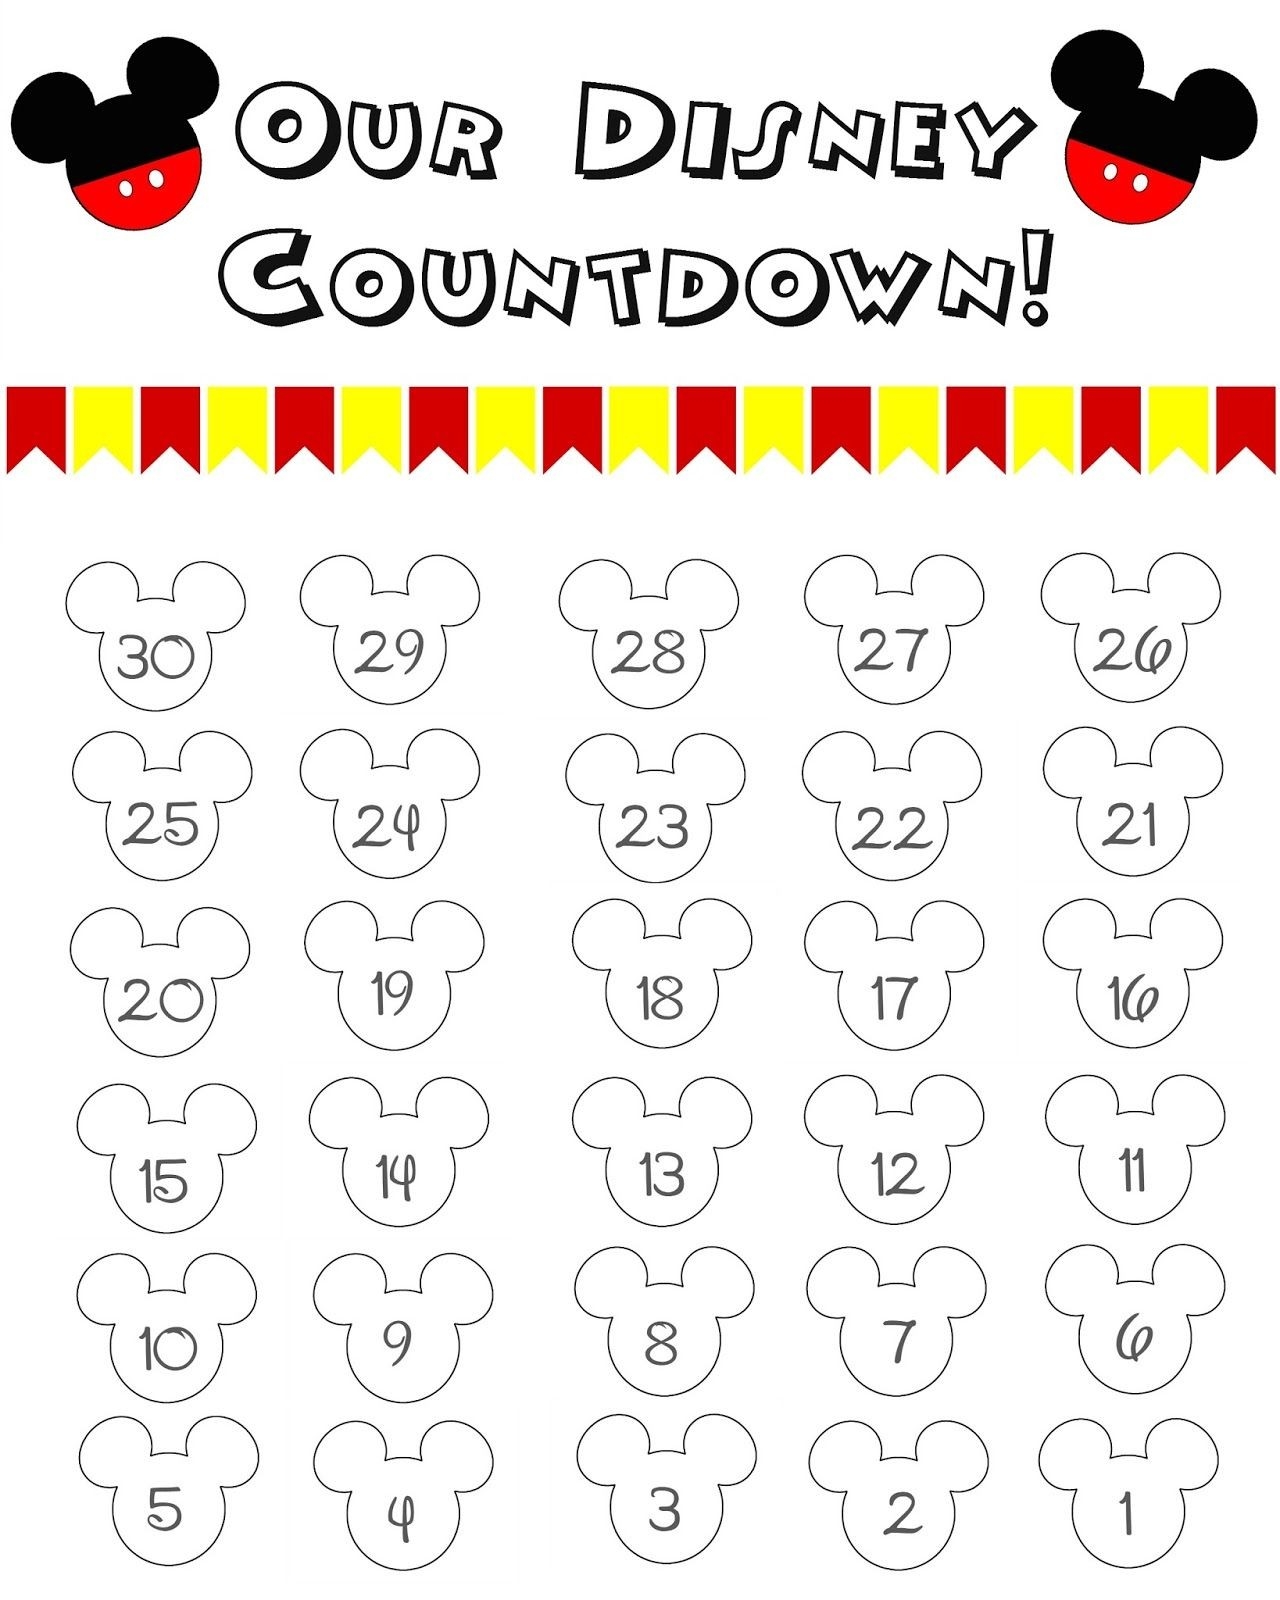 Disney World Countdown Calendar - Free Printable!! | Disney  Vacation Countdown Calendar